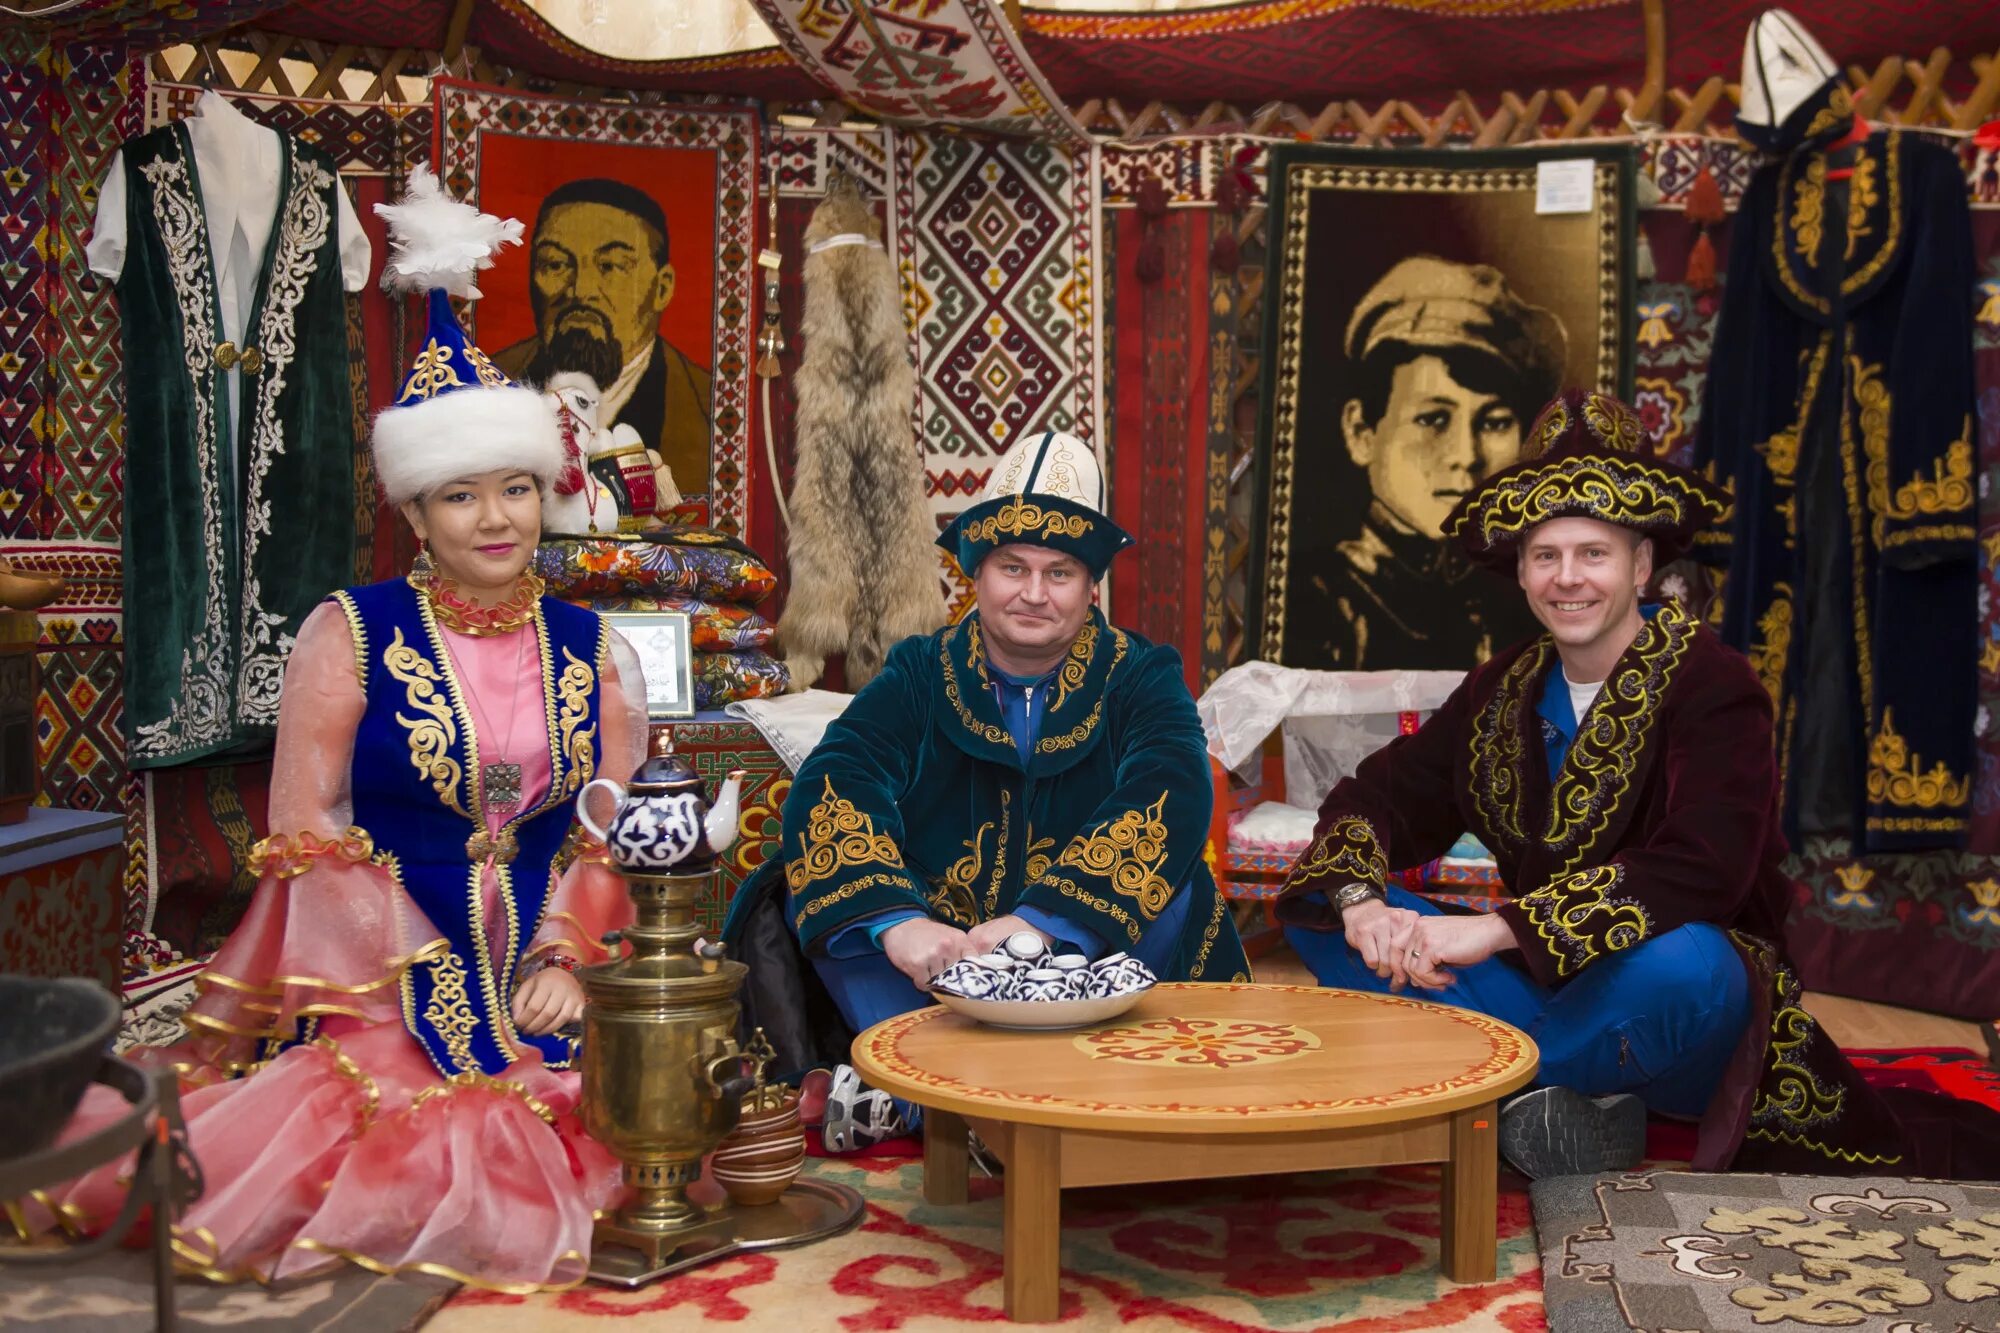 Язык казахского народа. Национальная одежда казахов. Традиционная казахская одежда. Национальные костюмы казахского народа. Казахская Национальная одежда.